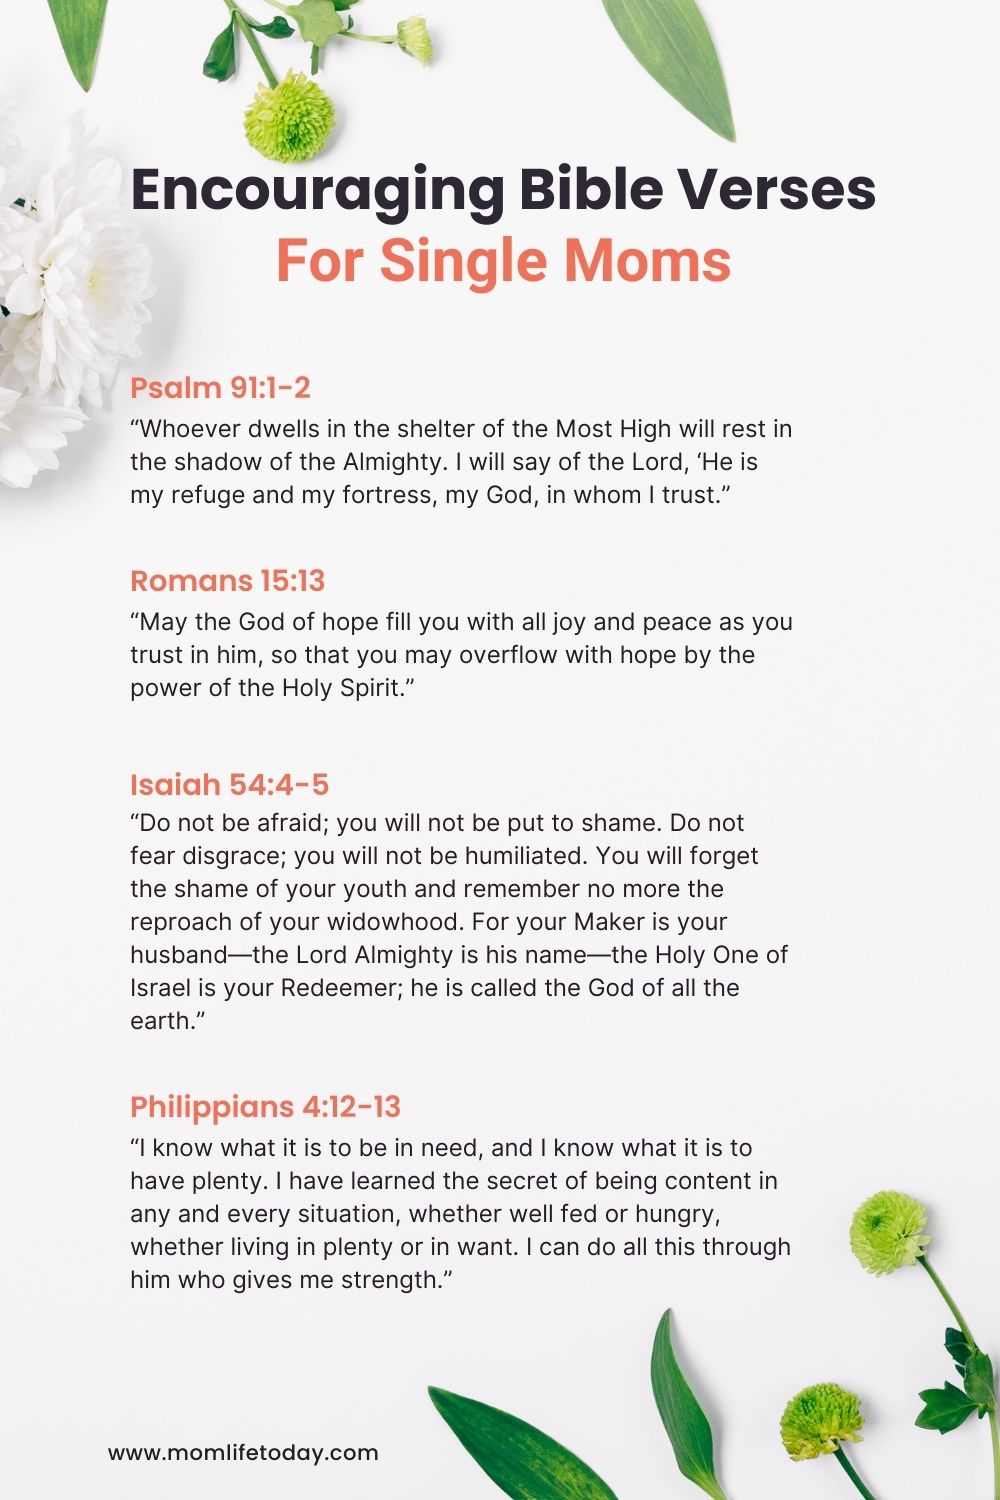 Verses for single moms